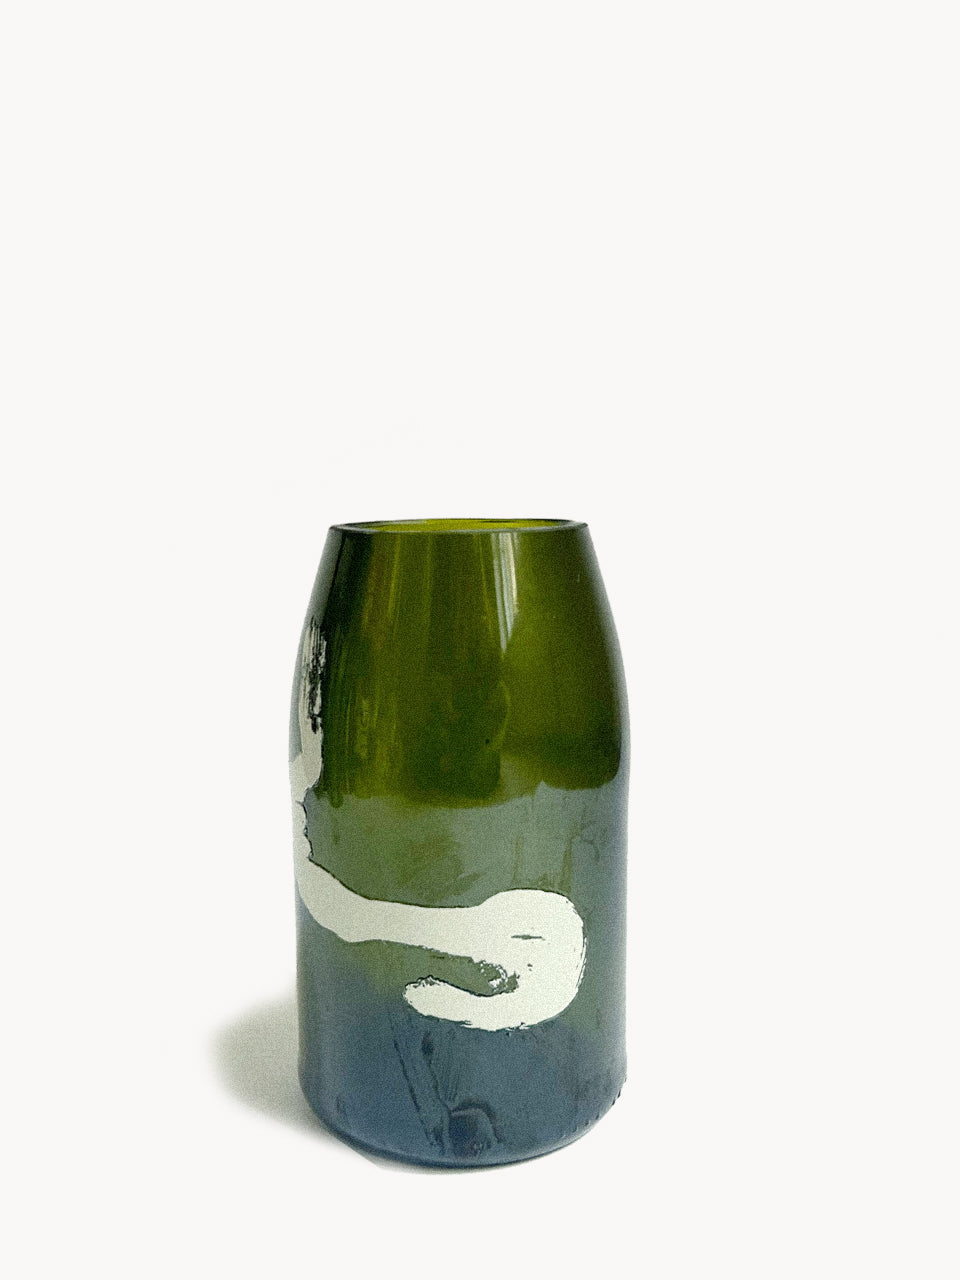 Green cut glass vase